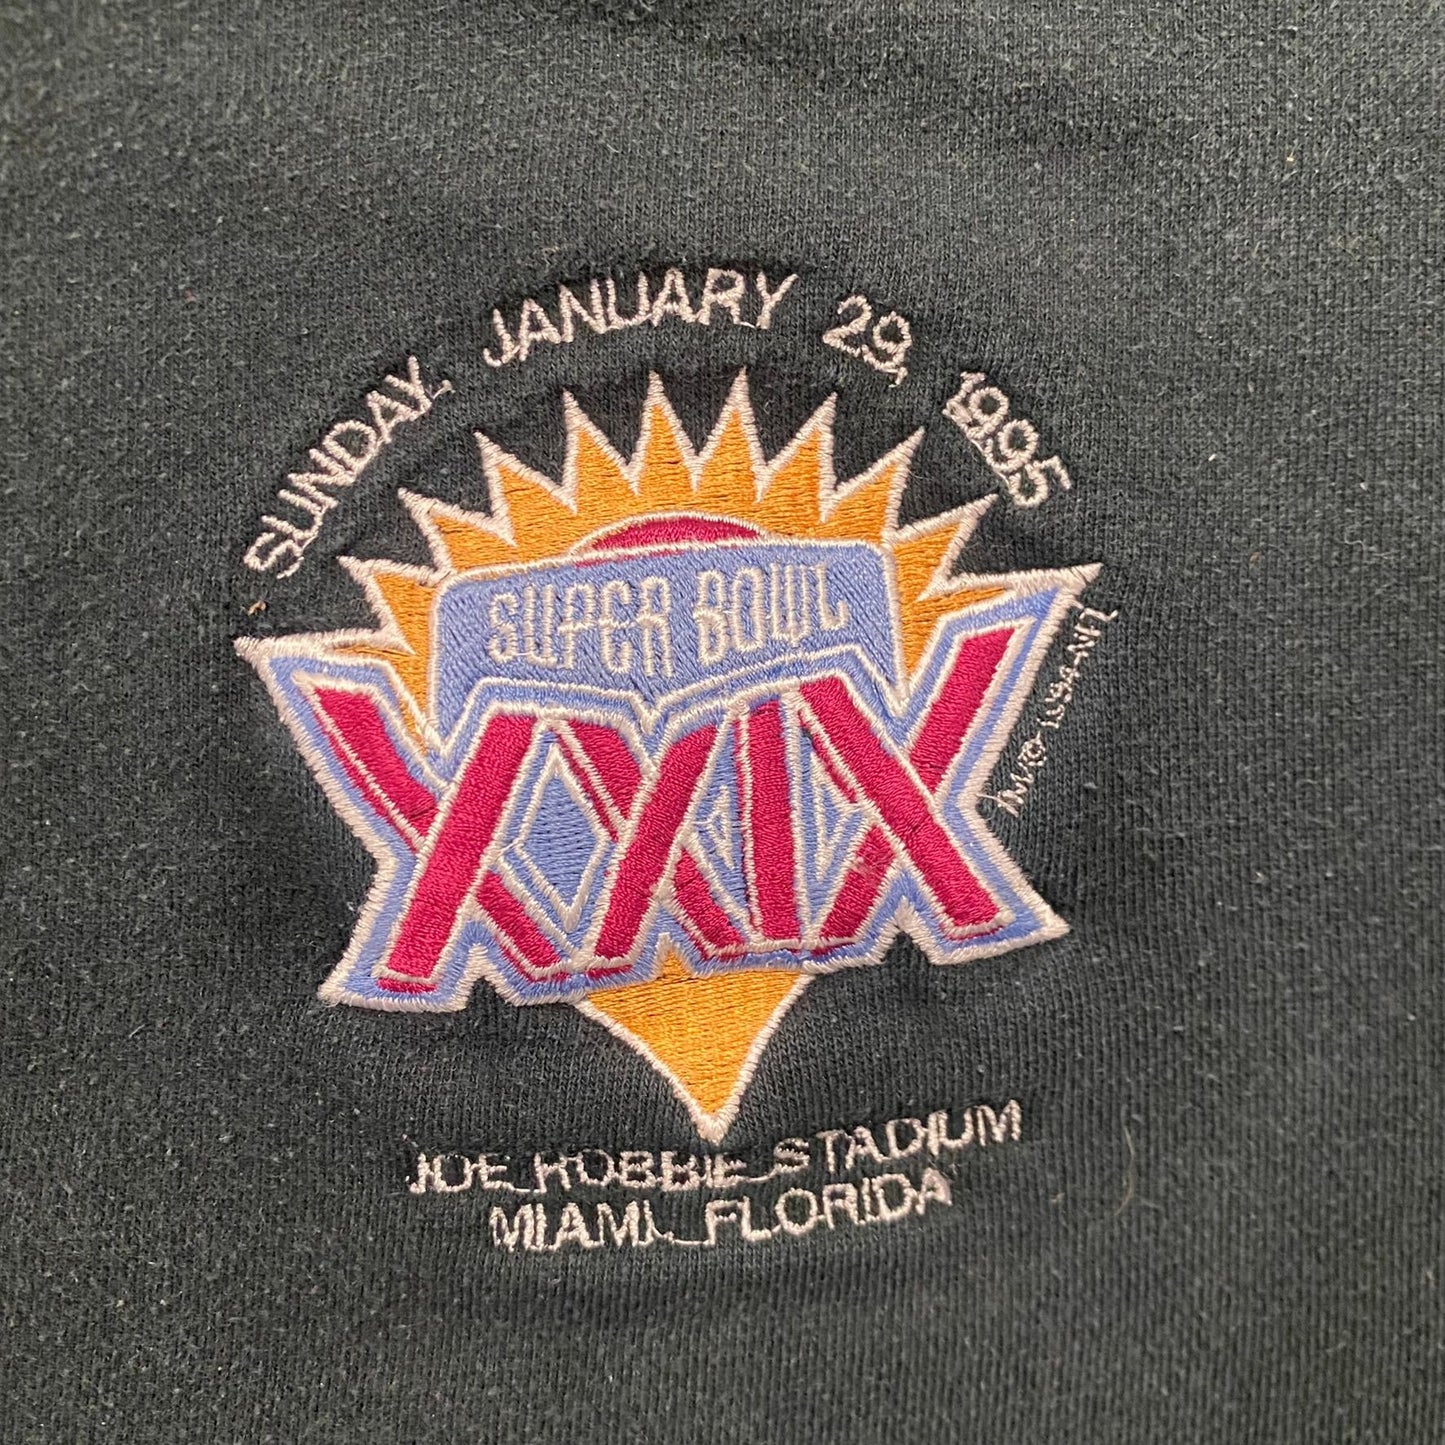 Vintage 90s Starter NFL Super Bowl XXIX Crewneck Sweatshirt